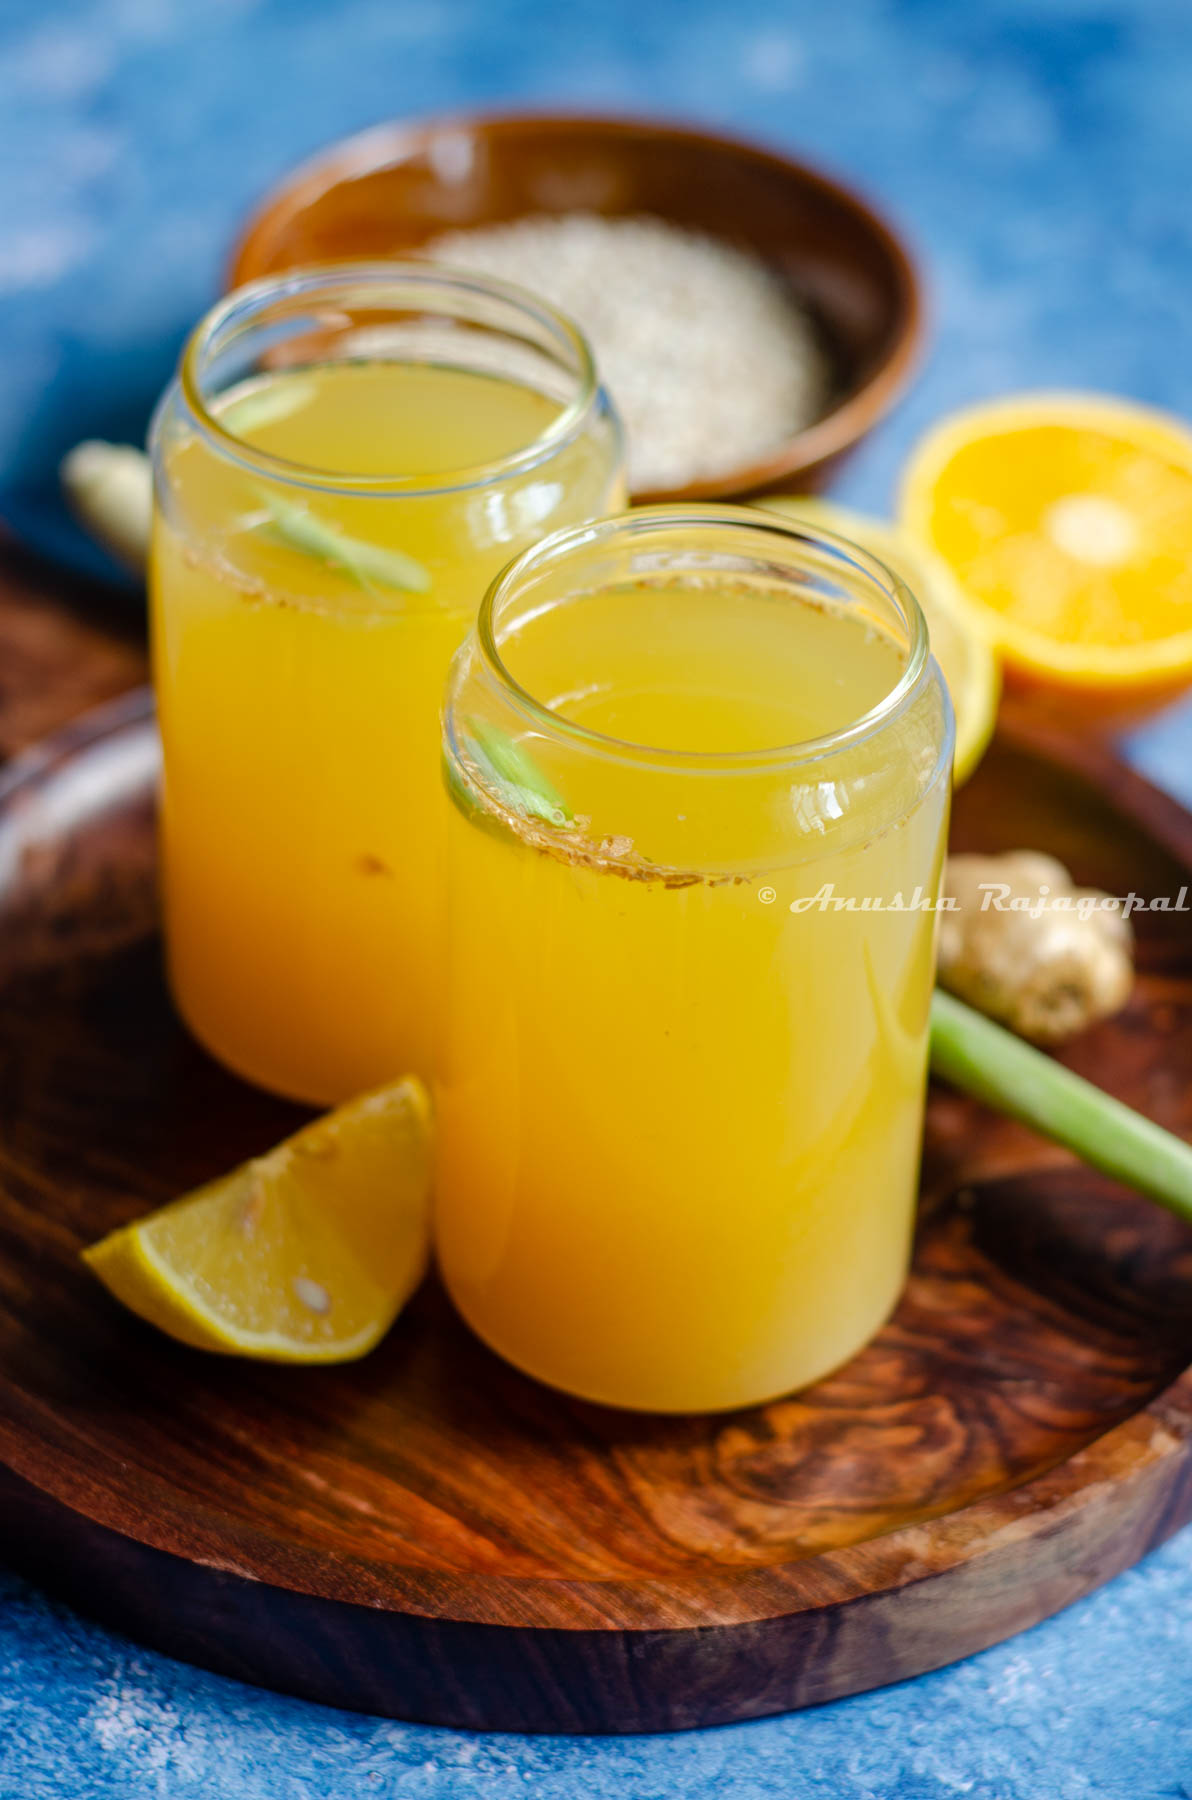 barley lemonade with orange and ginger served in a wooden platter. Lemon wedges, orange halves and lemon grass with a knob of ginger by the side.